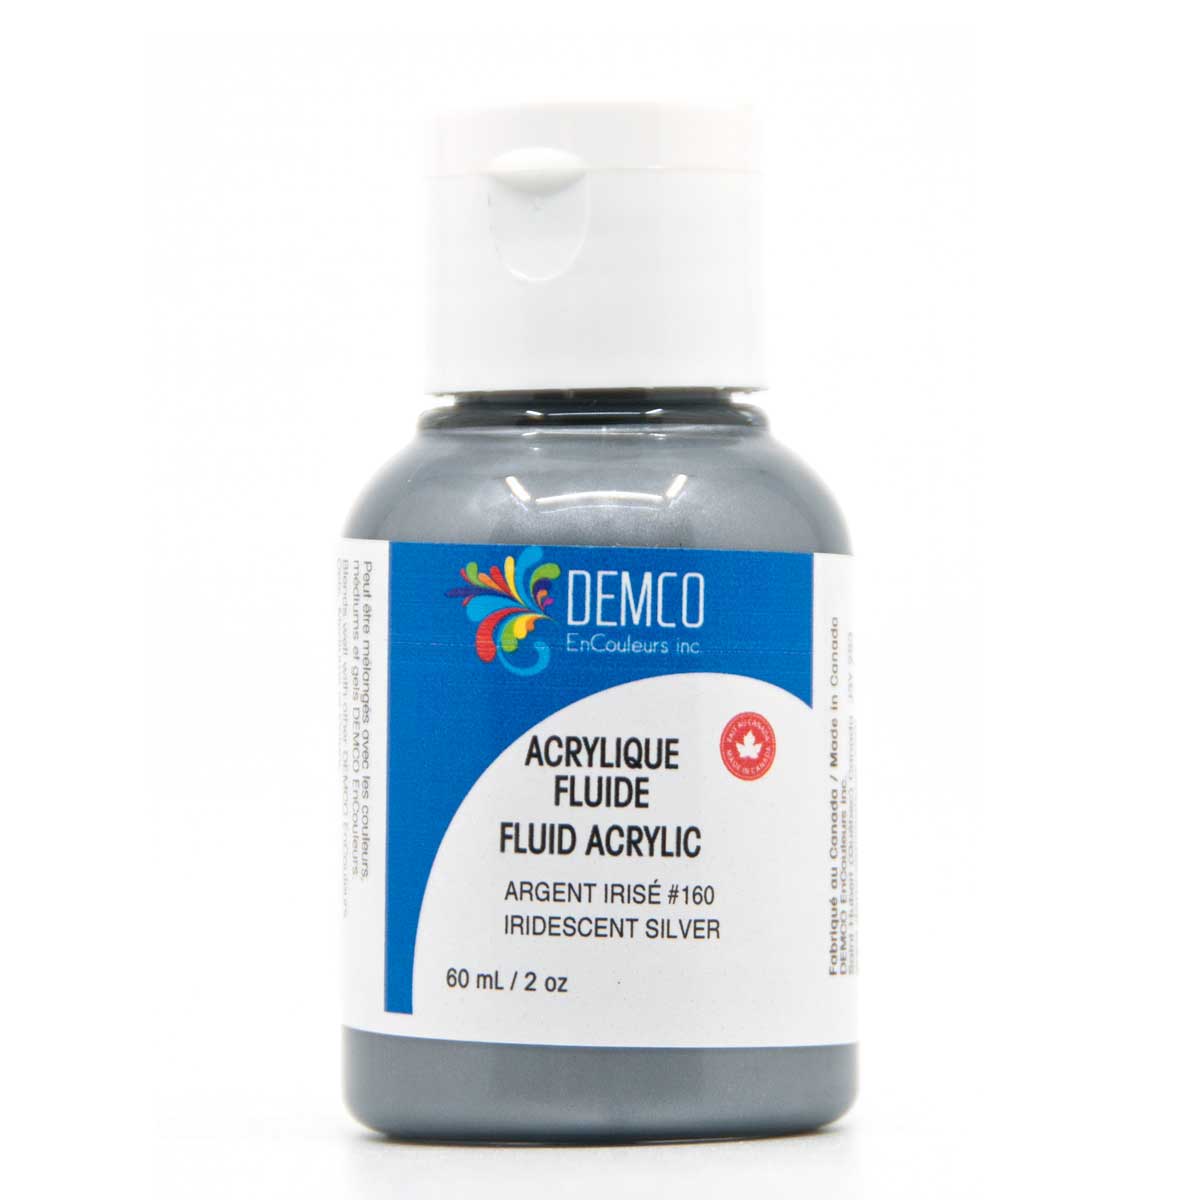 Demco Fluid Acrylic Paint - Iridescent Silver 60 ml